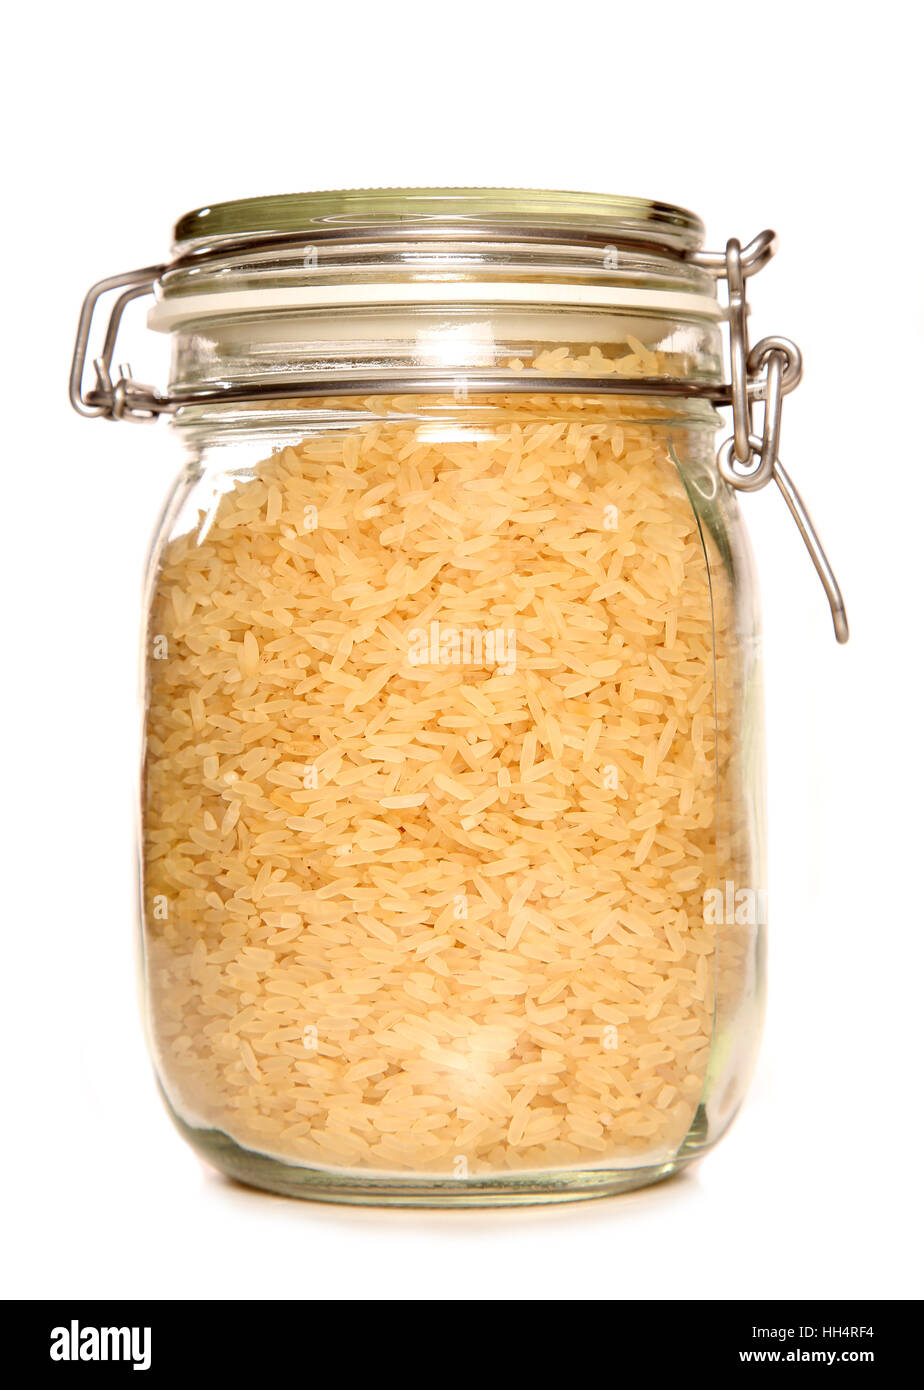 wholegrain rice in a jar studio cutout Stock Photo